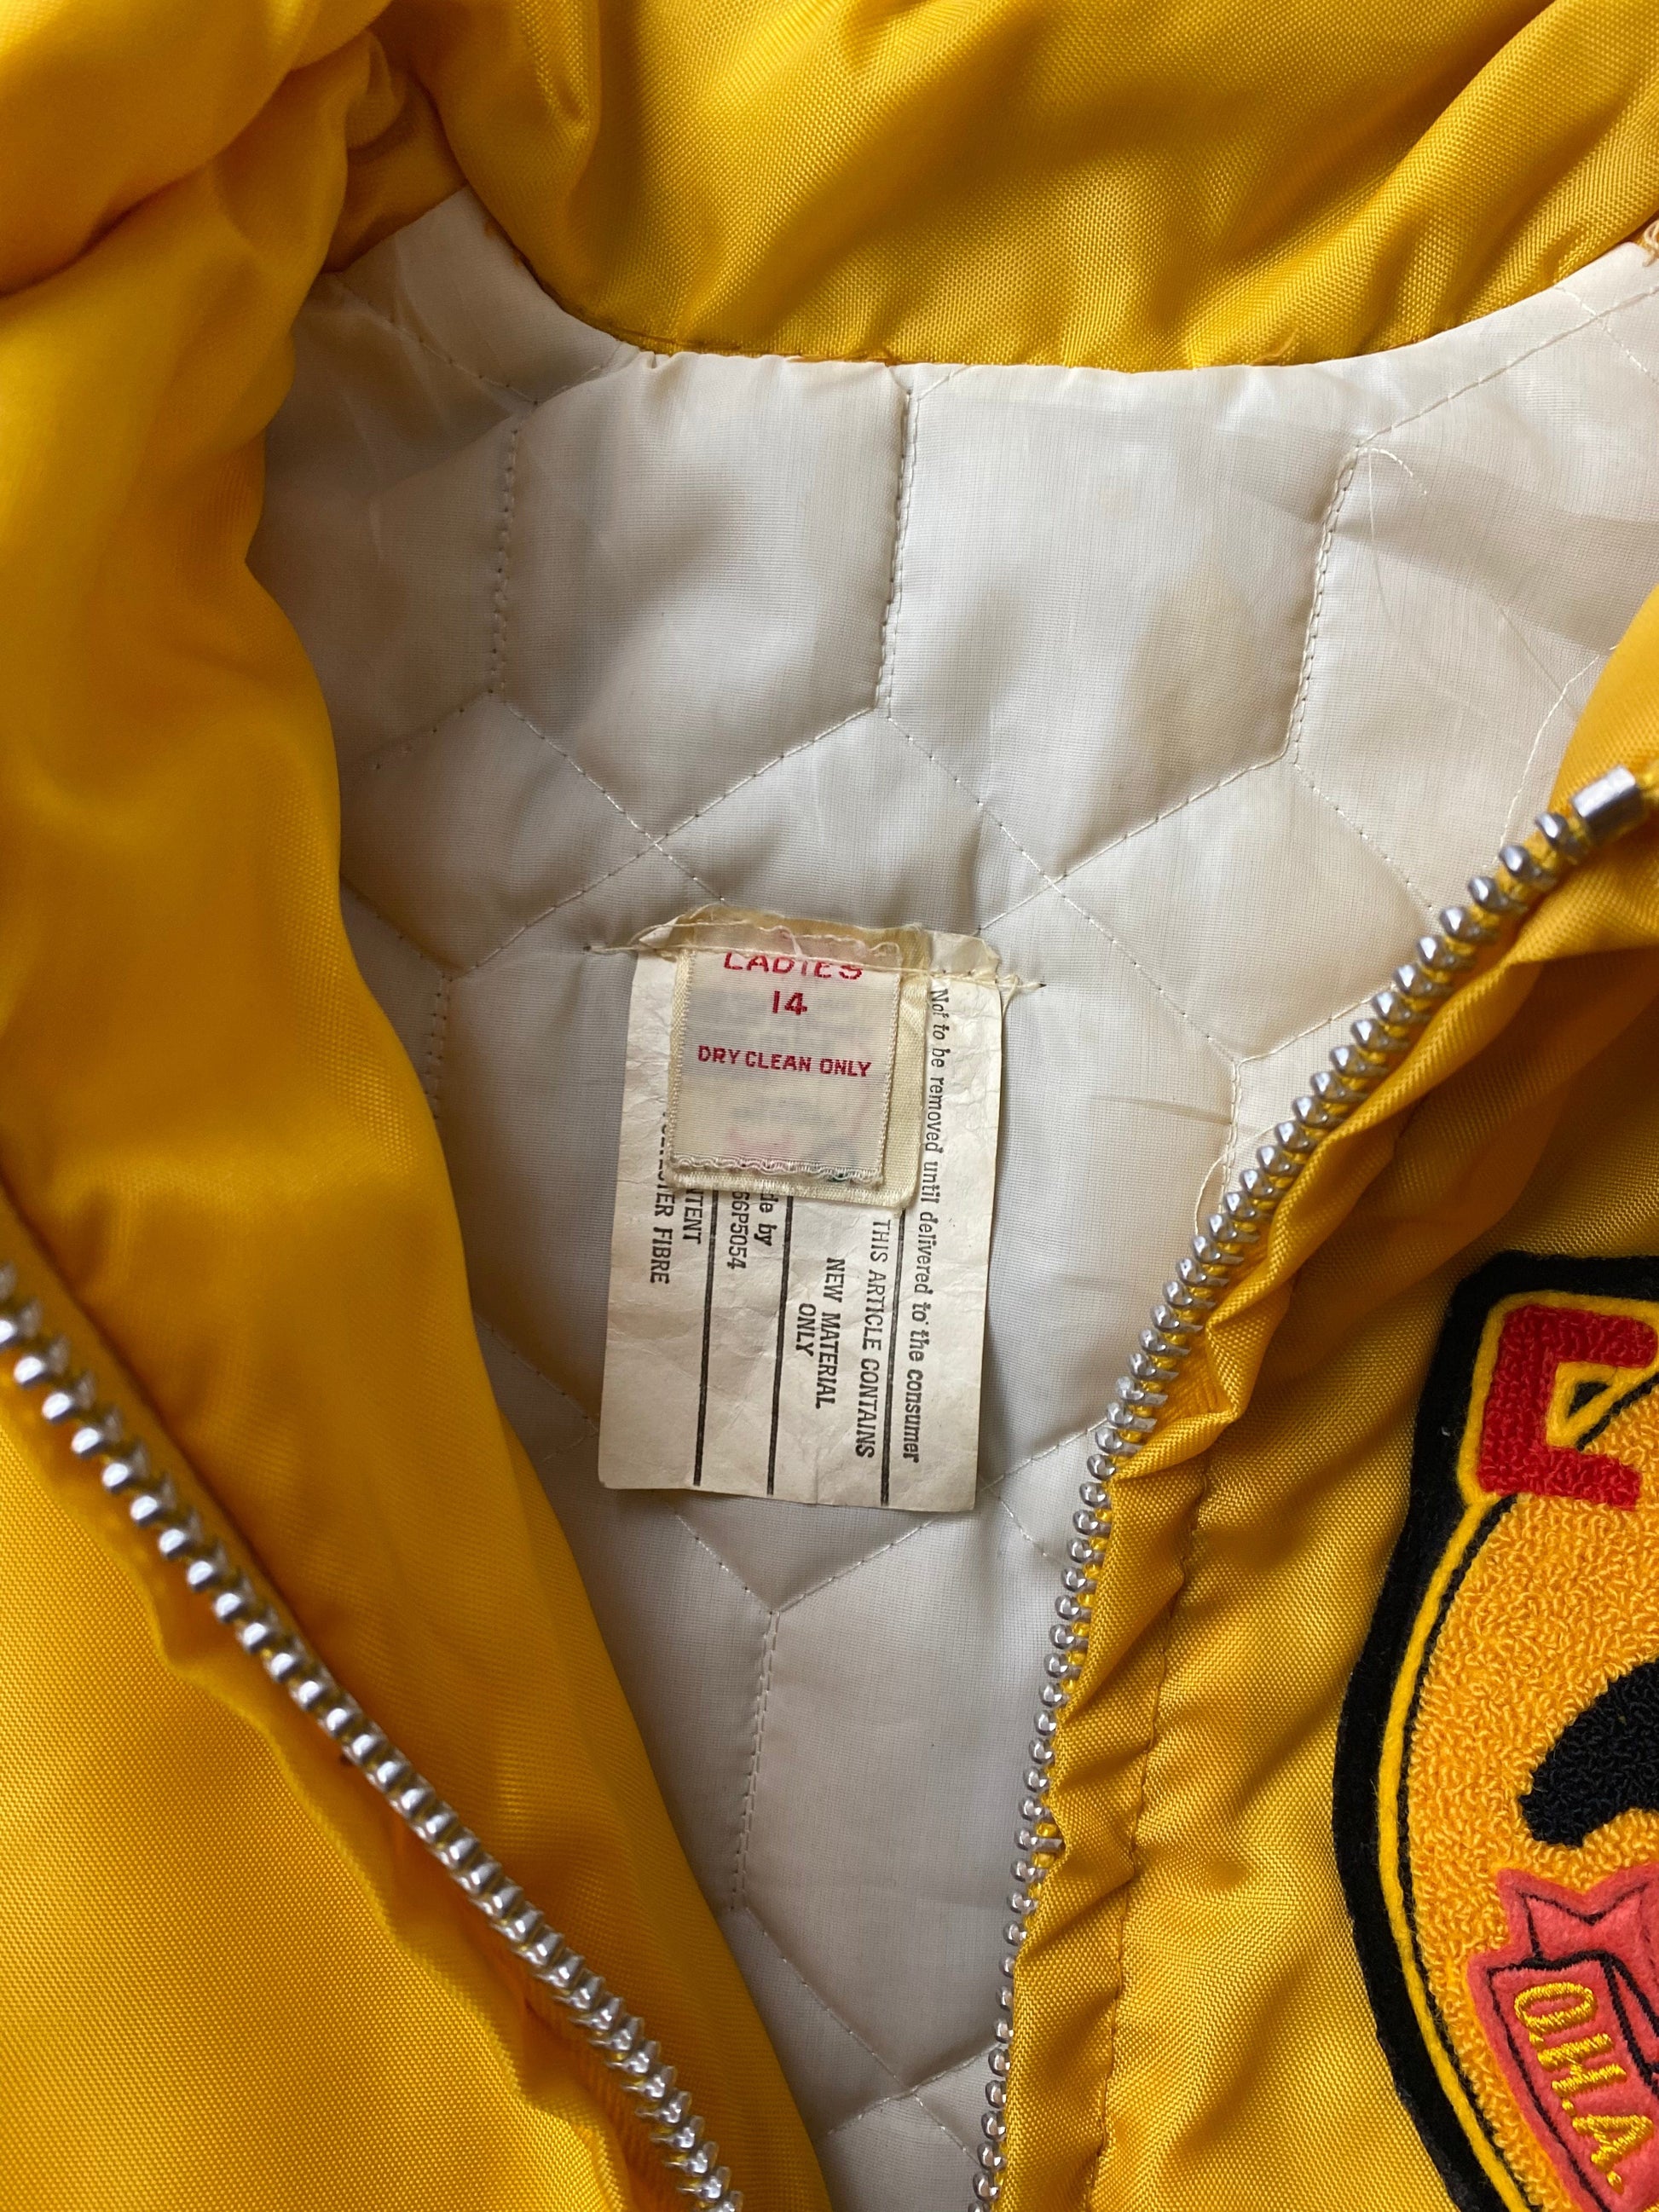 Other Jackets & Coats Vintage Clinton Colts Jacket Womens 14 Medium Yellow Horses Coat 70s 80s